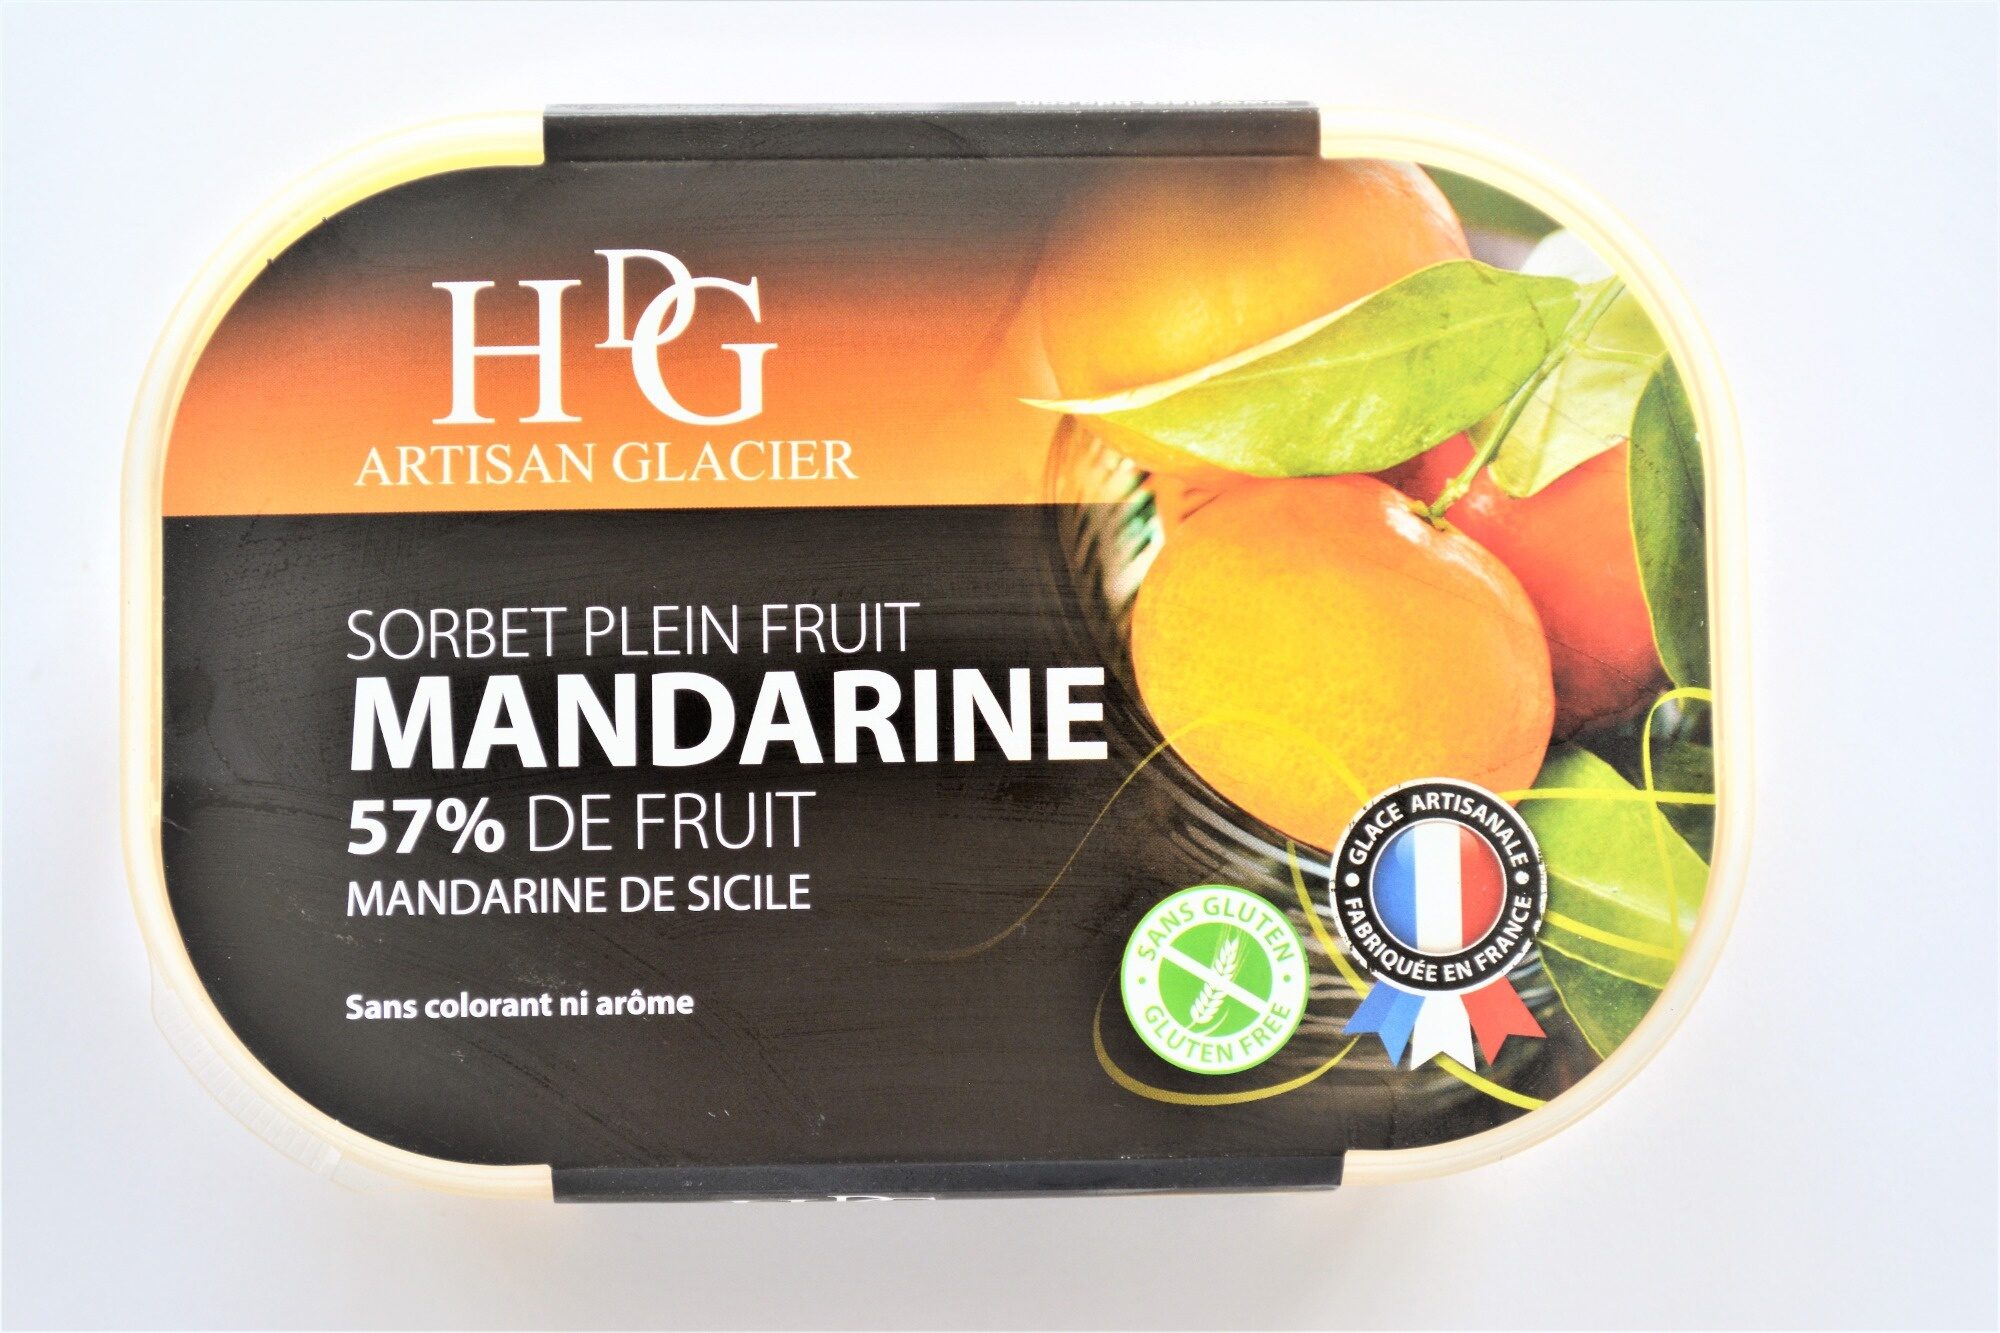 Sorbet plein fruit MANDARINE, 57% de fruit - Product - fr